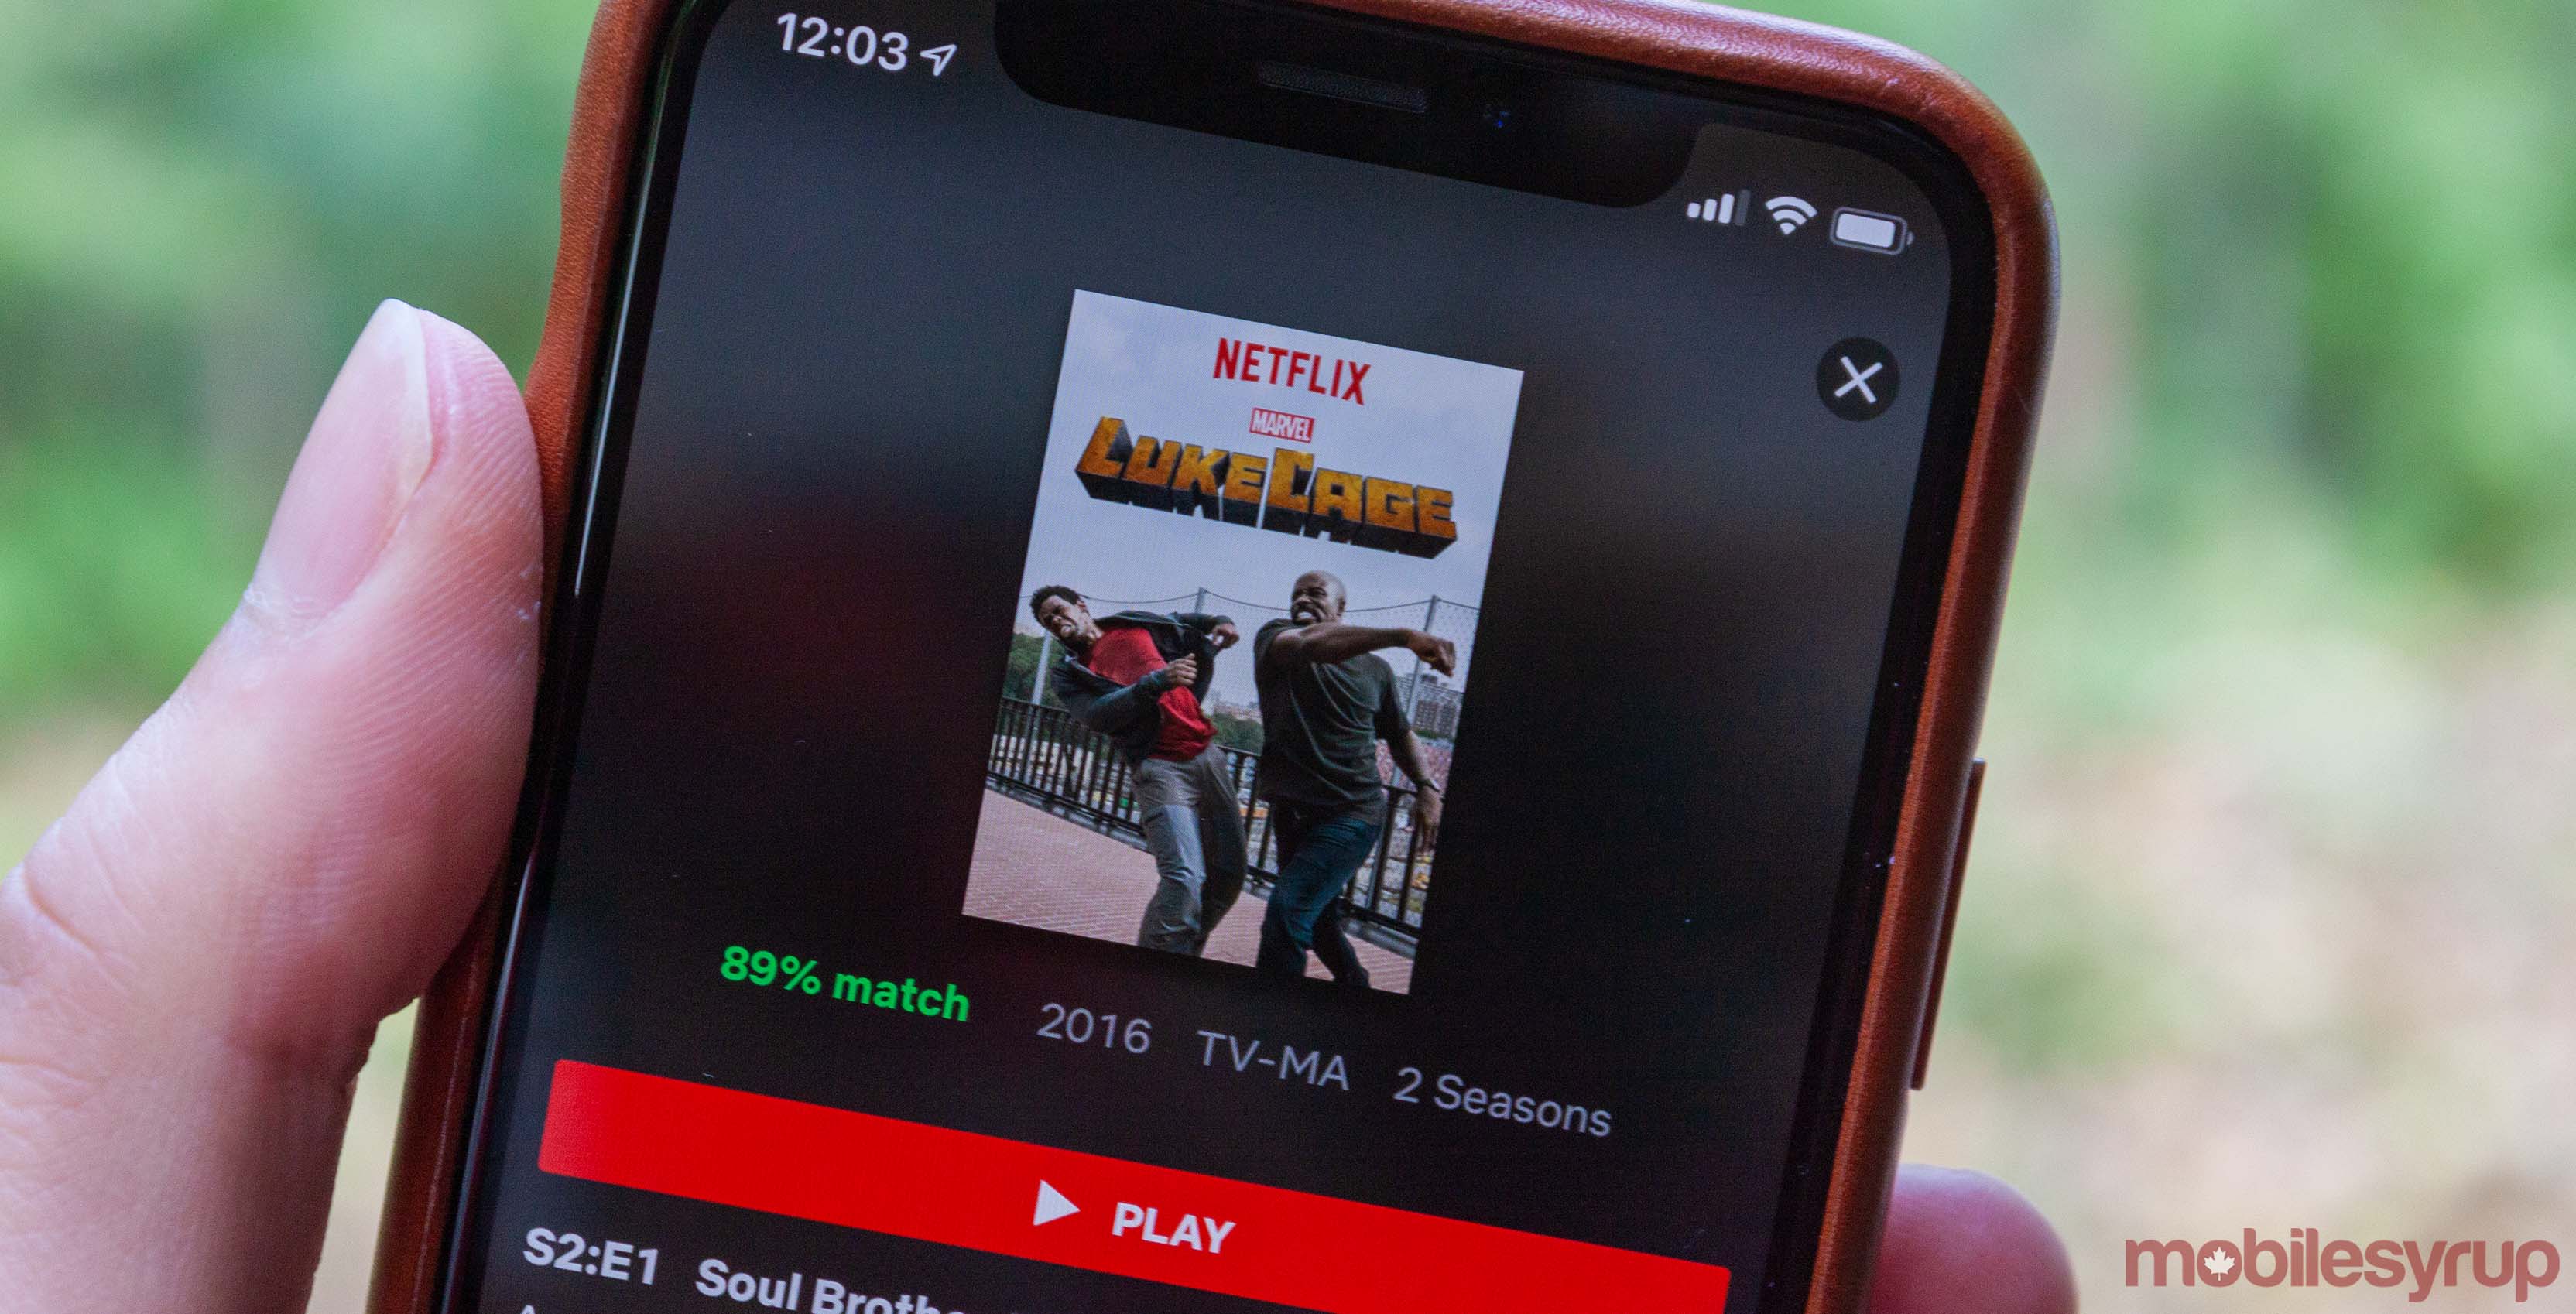 Luke Cage on Netflix